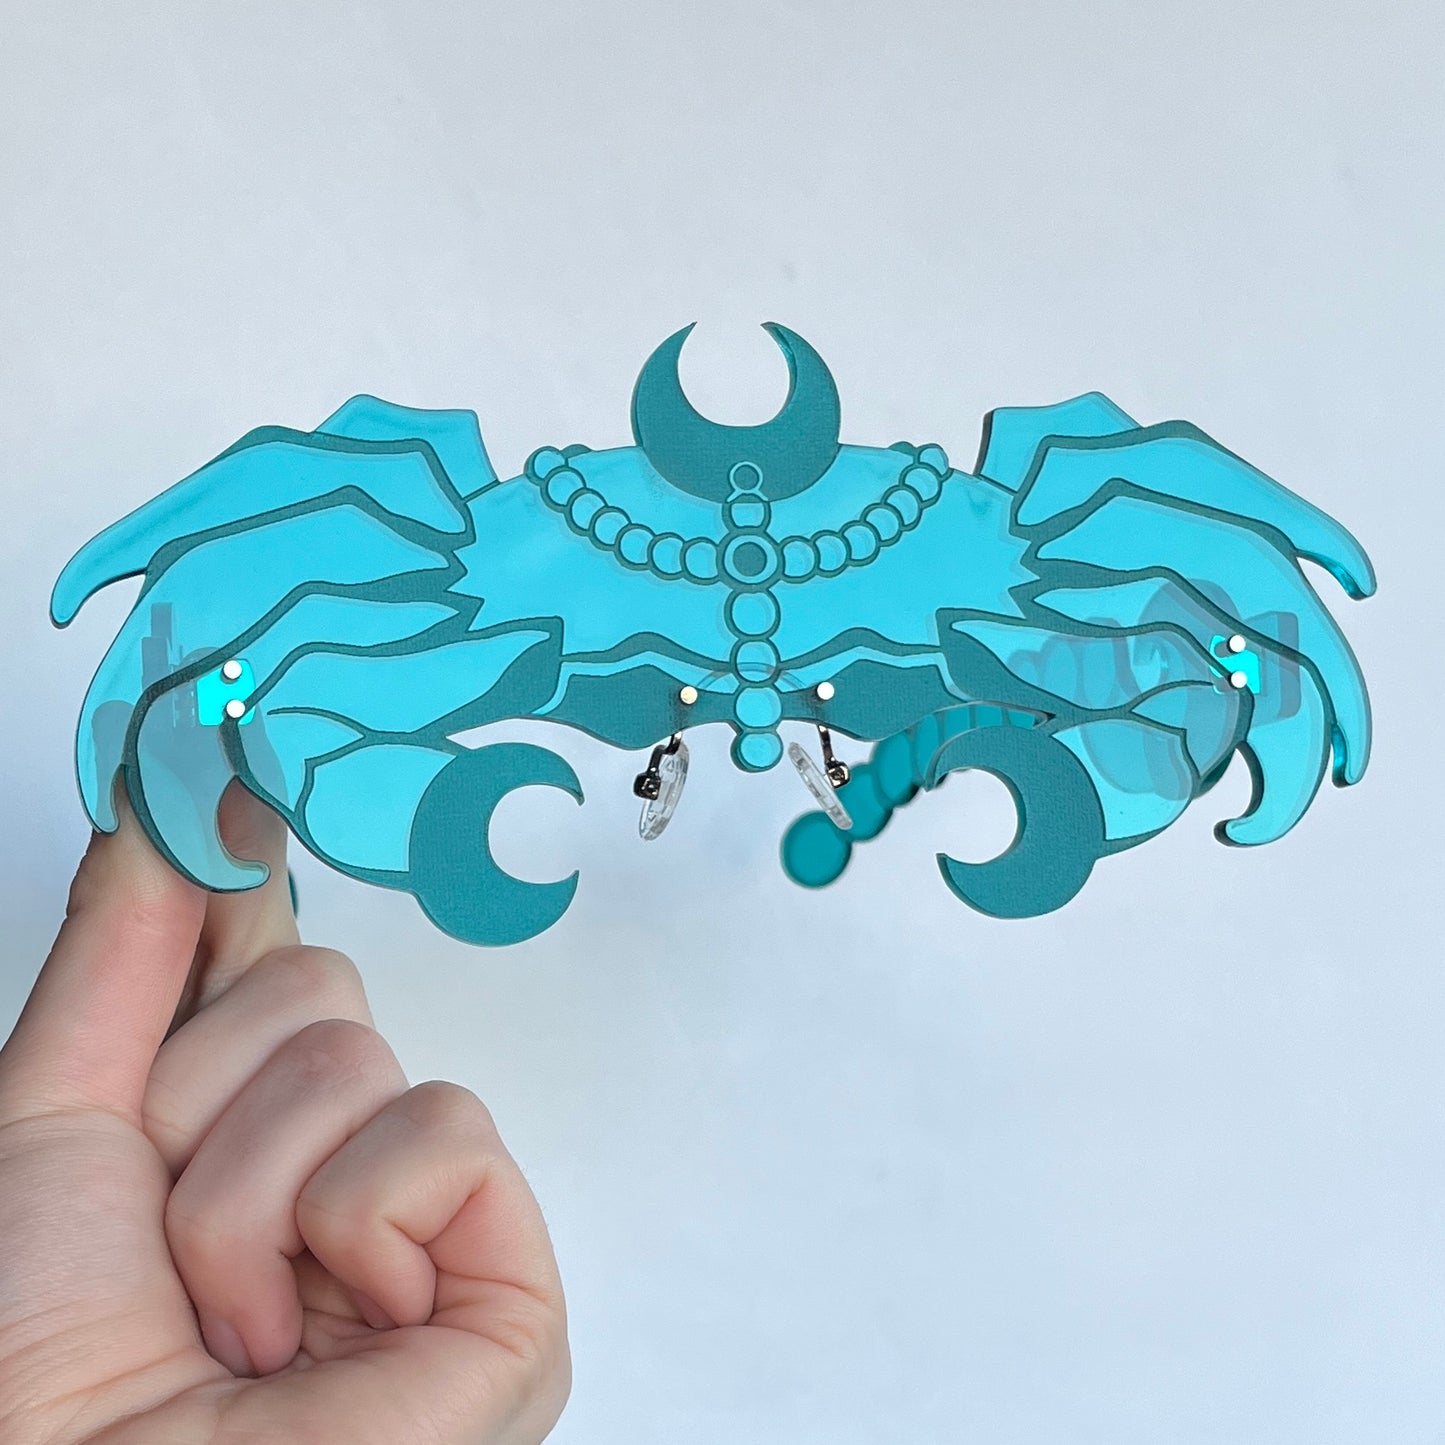 Cancer/Crab